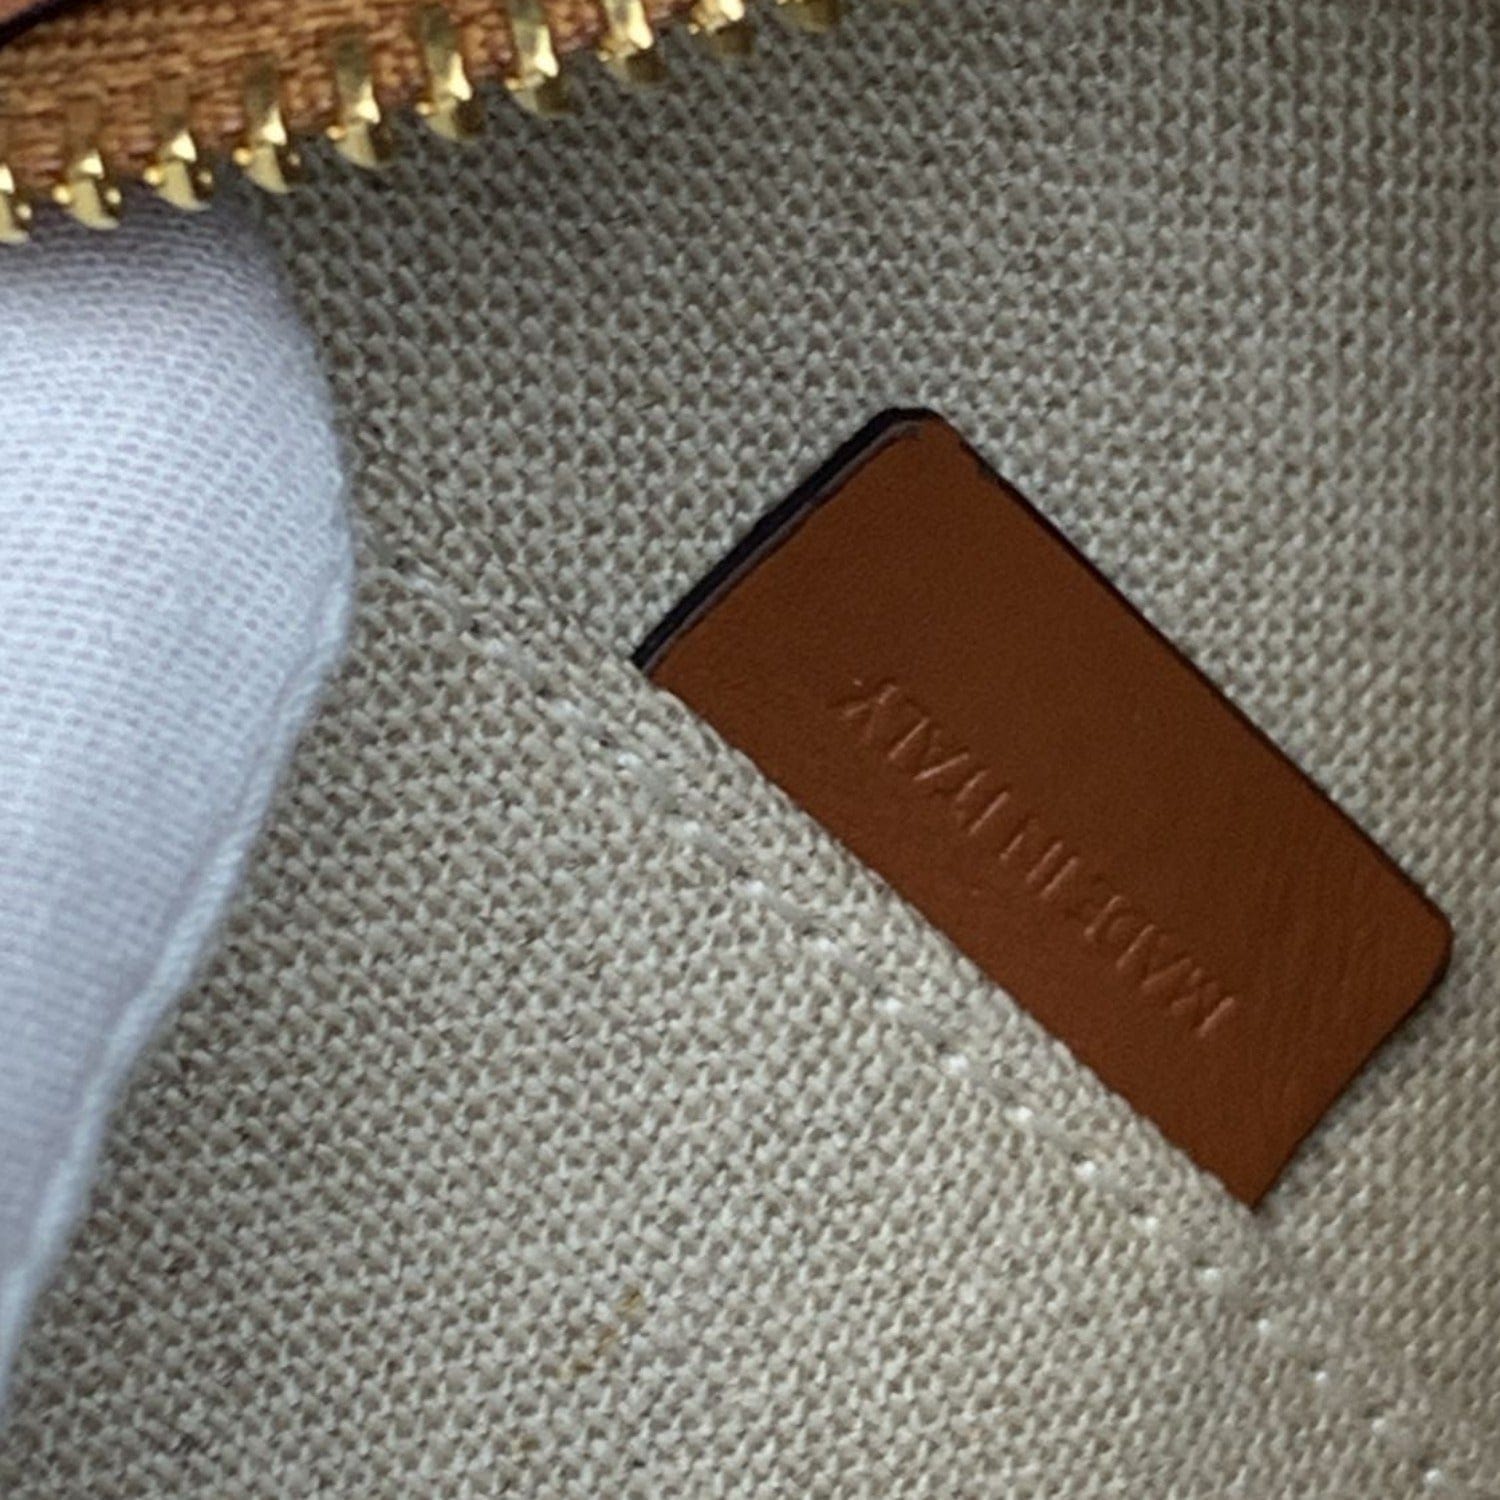 Celine Triomphe Shoulder Bag Tan in Natural Calfskin Leather with Gold-tone  - US